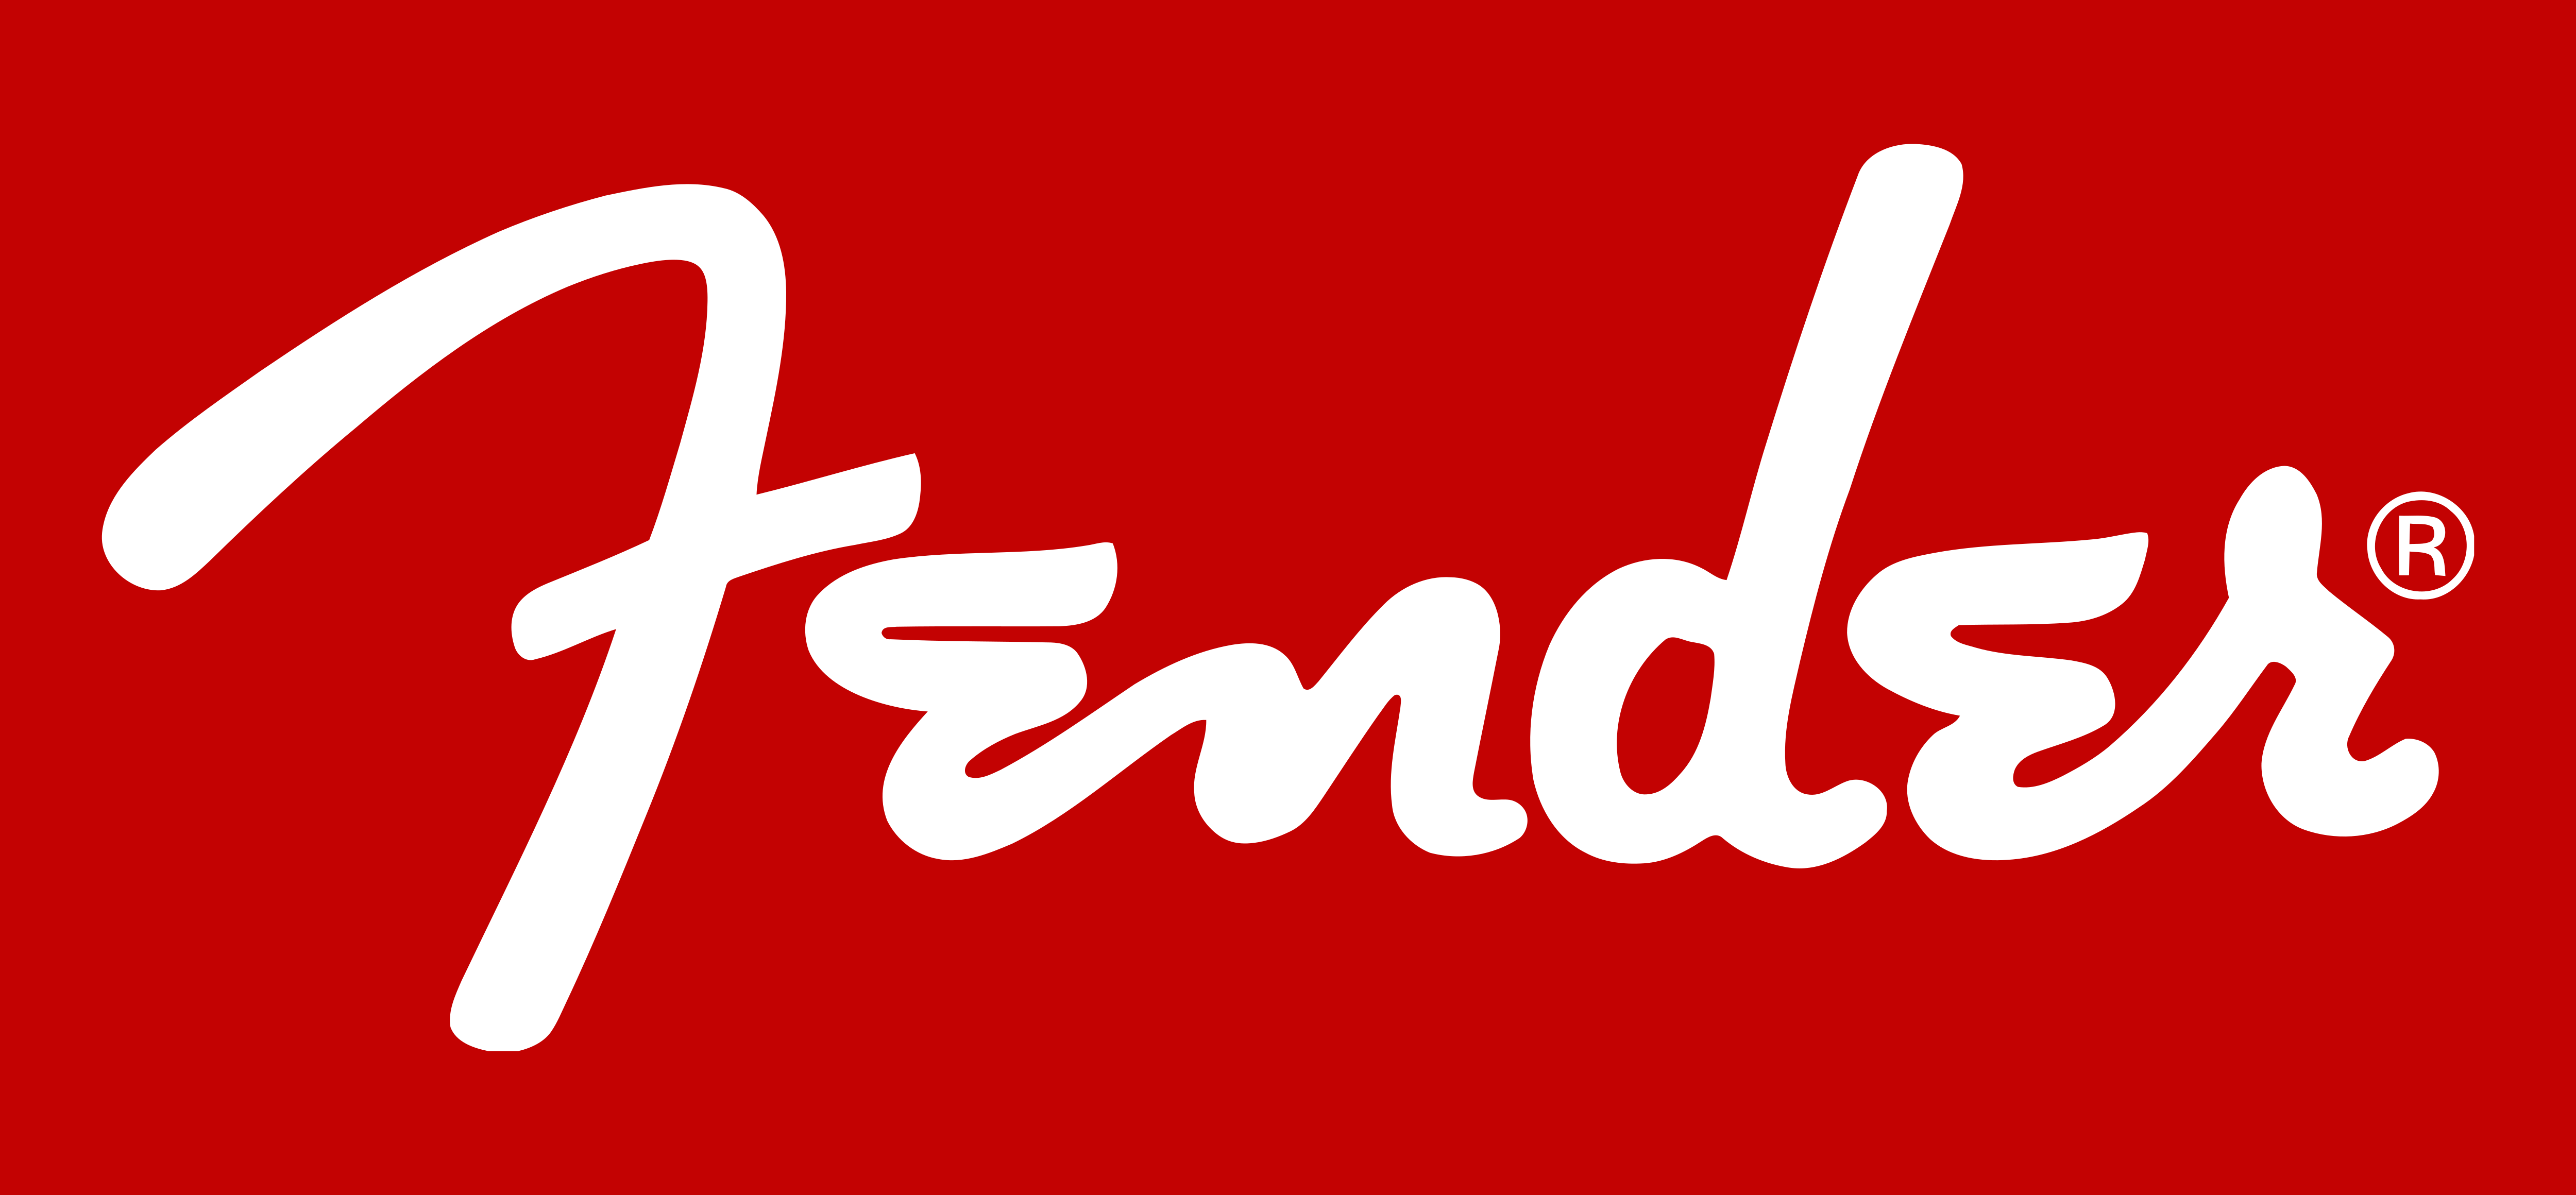 Fender – Logos Download